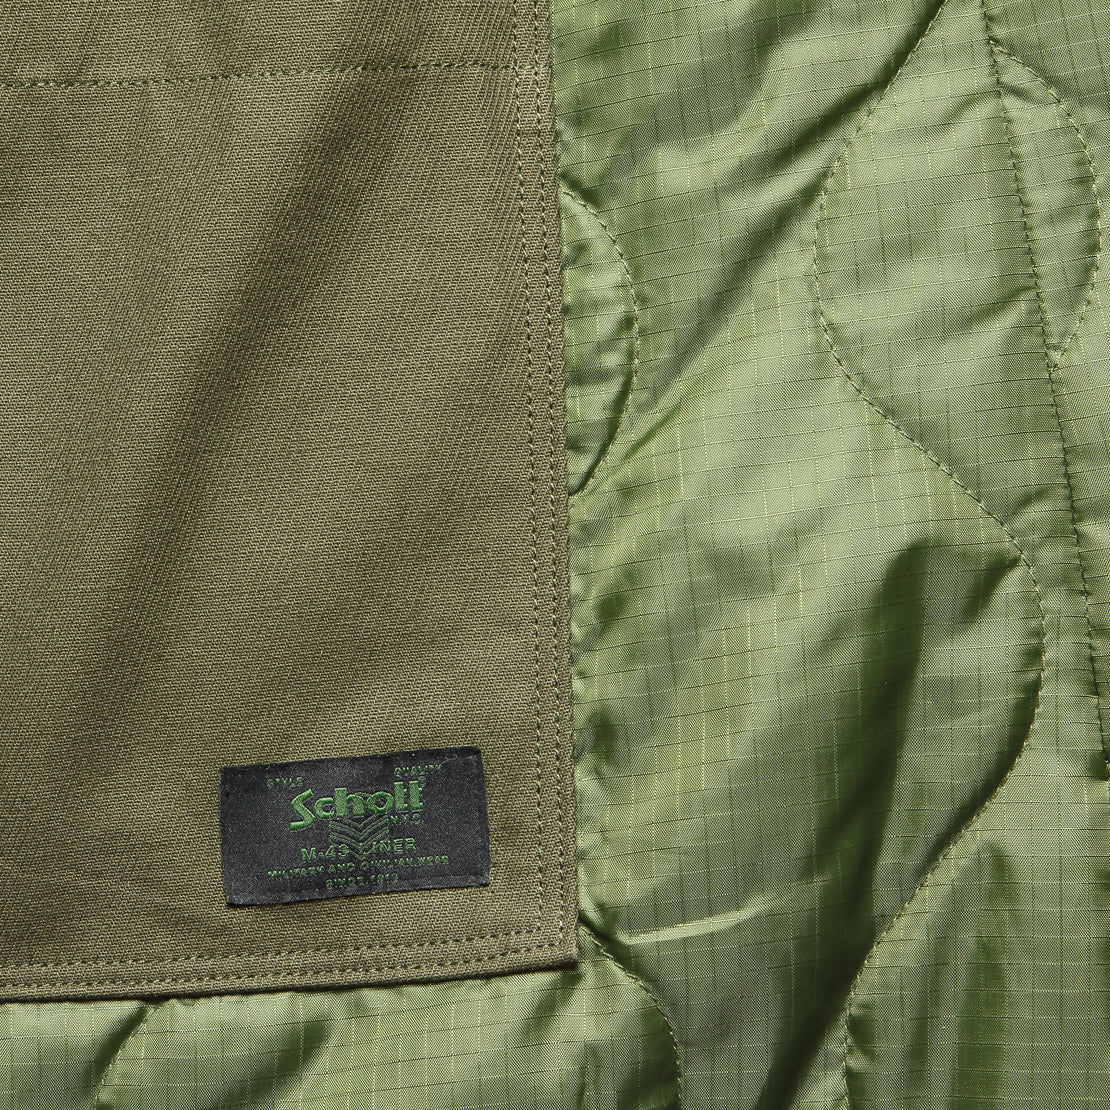 Flight Jacket Liner - Olive - Schott - STAG Provisions - Outerwear - Coat / Jacket